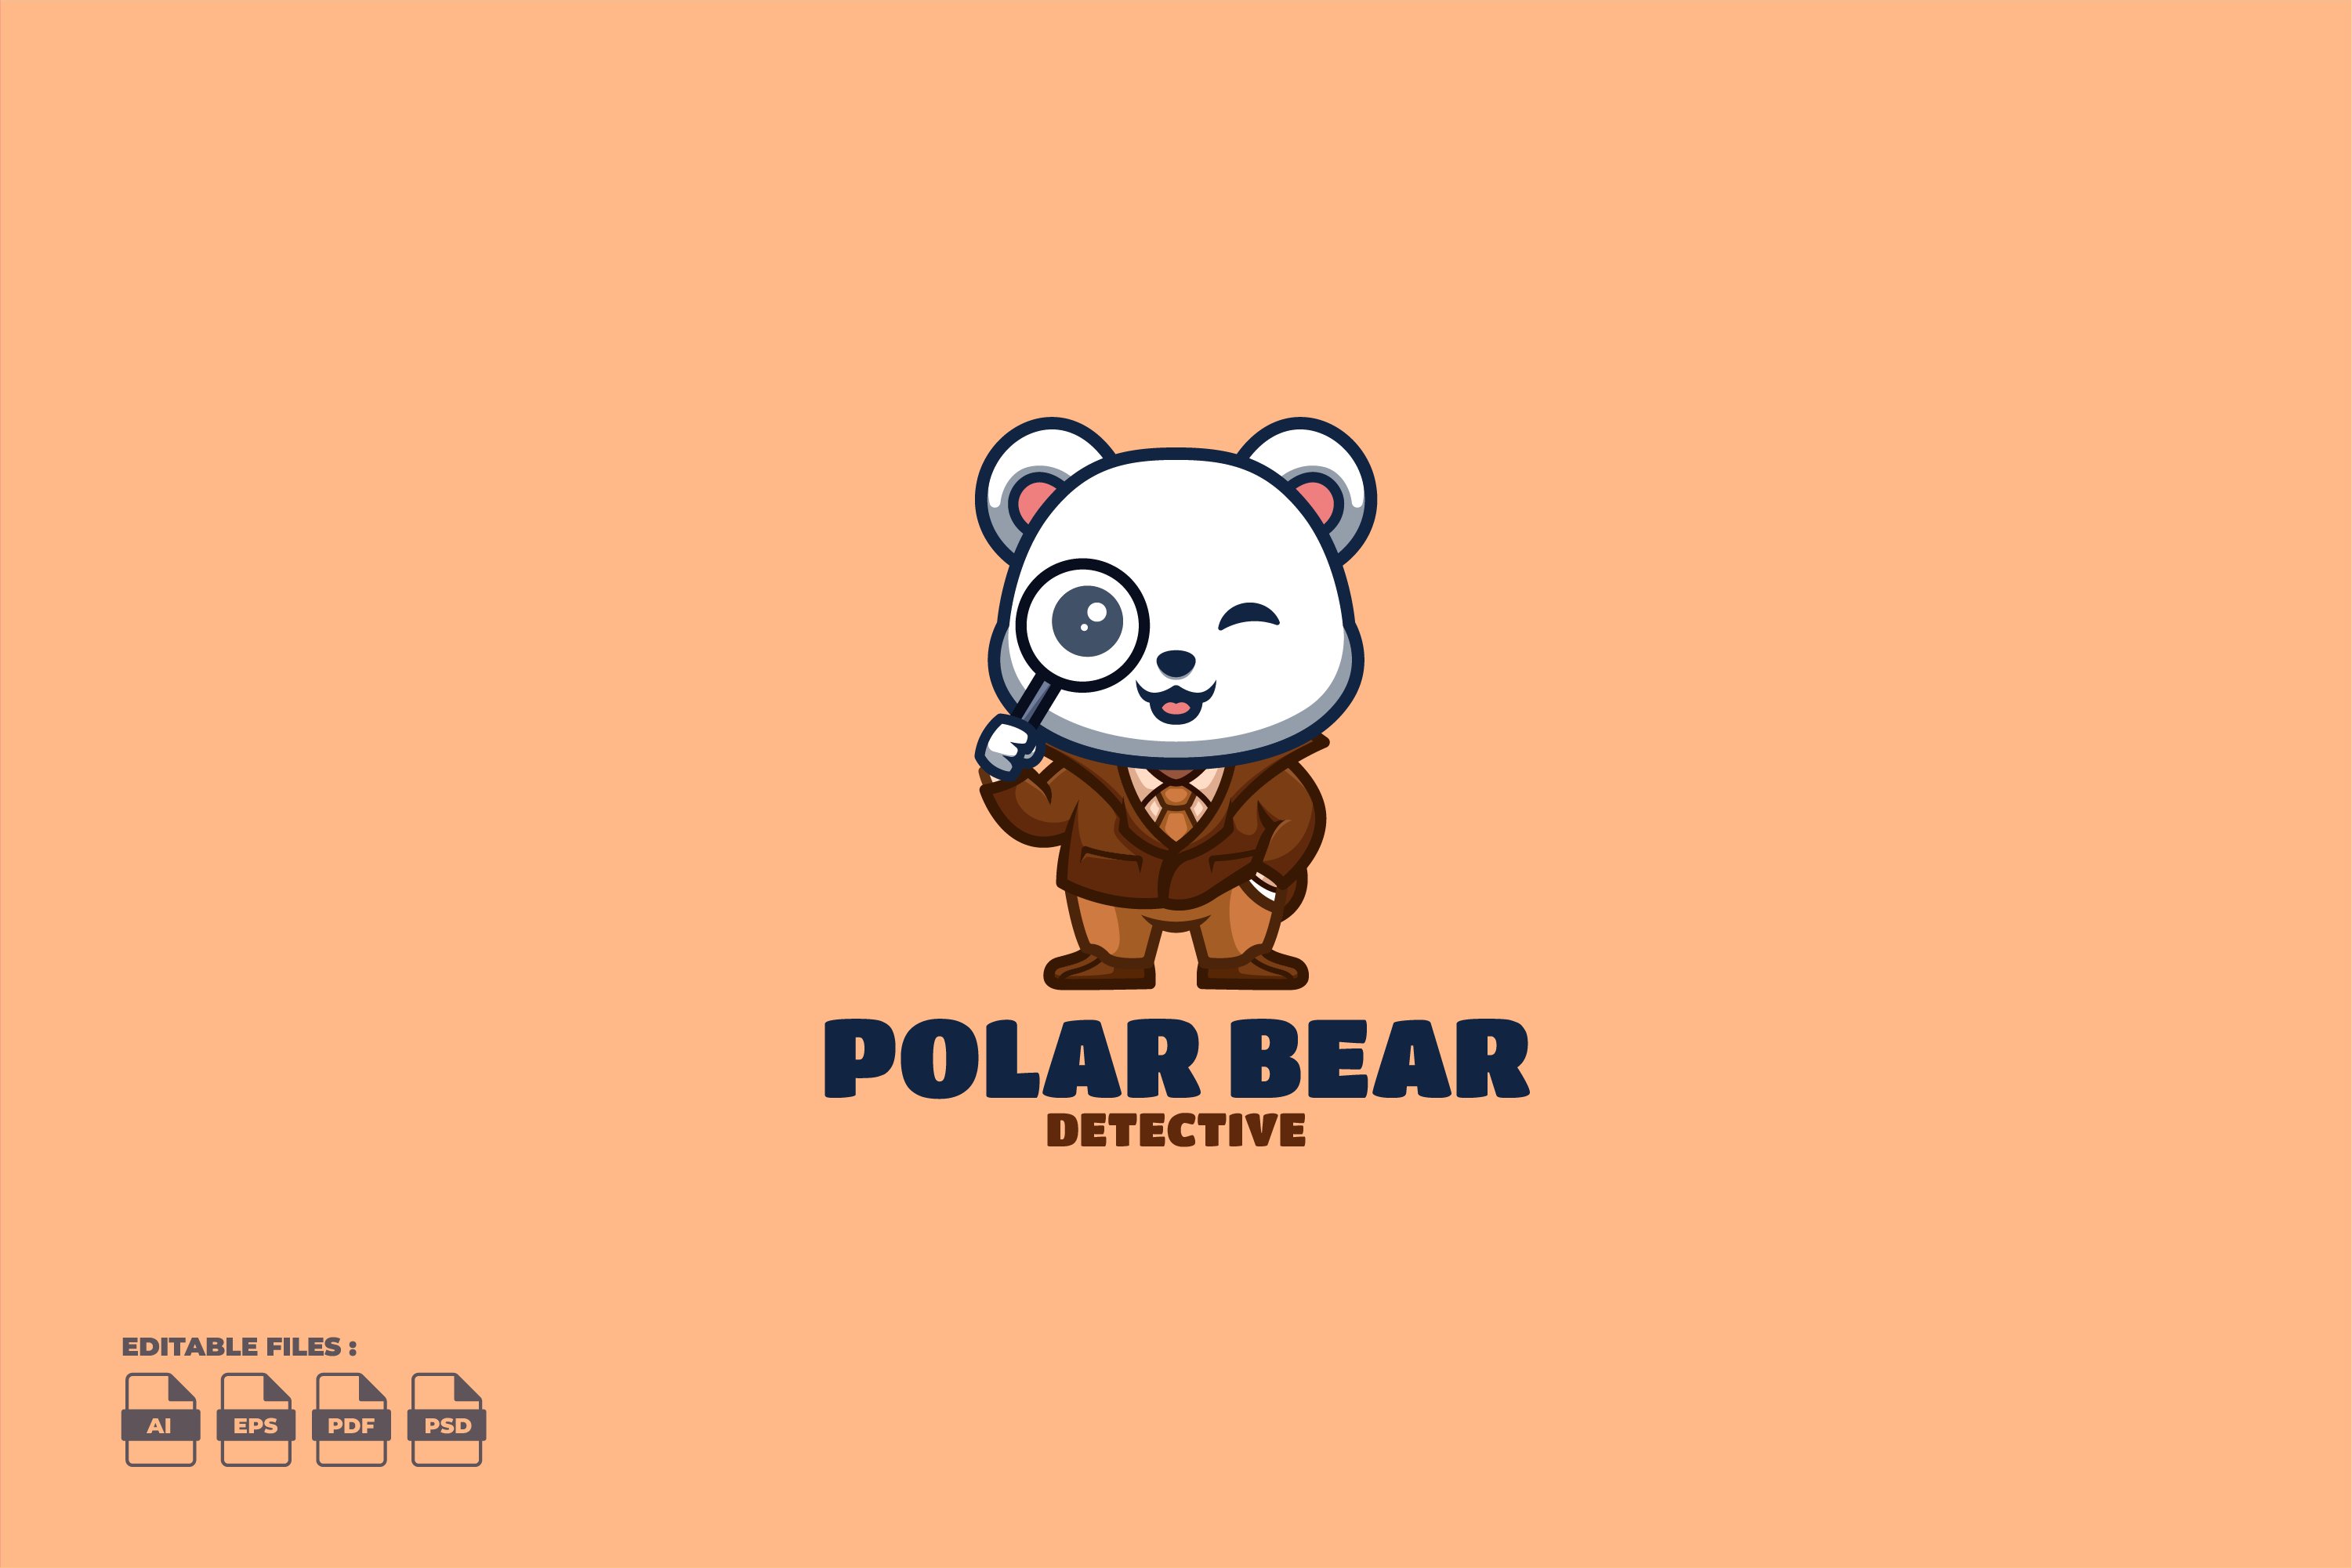 Detective Polar Bear Cute Mascot Log cover image.